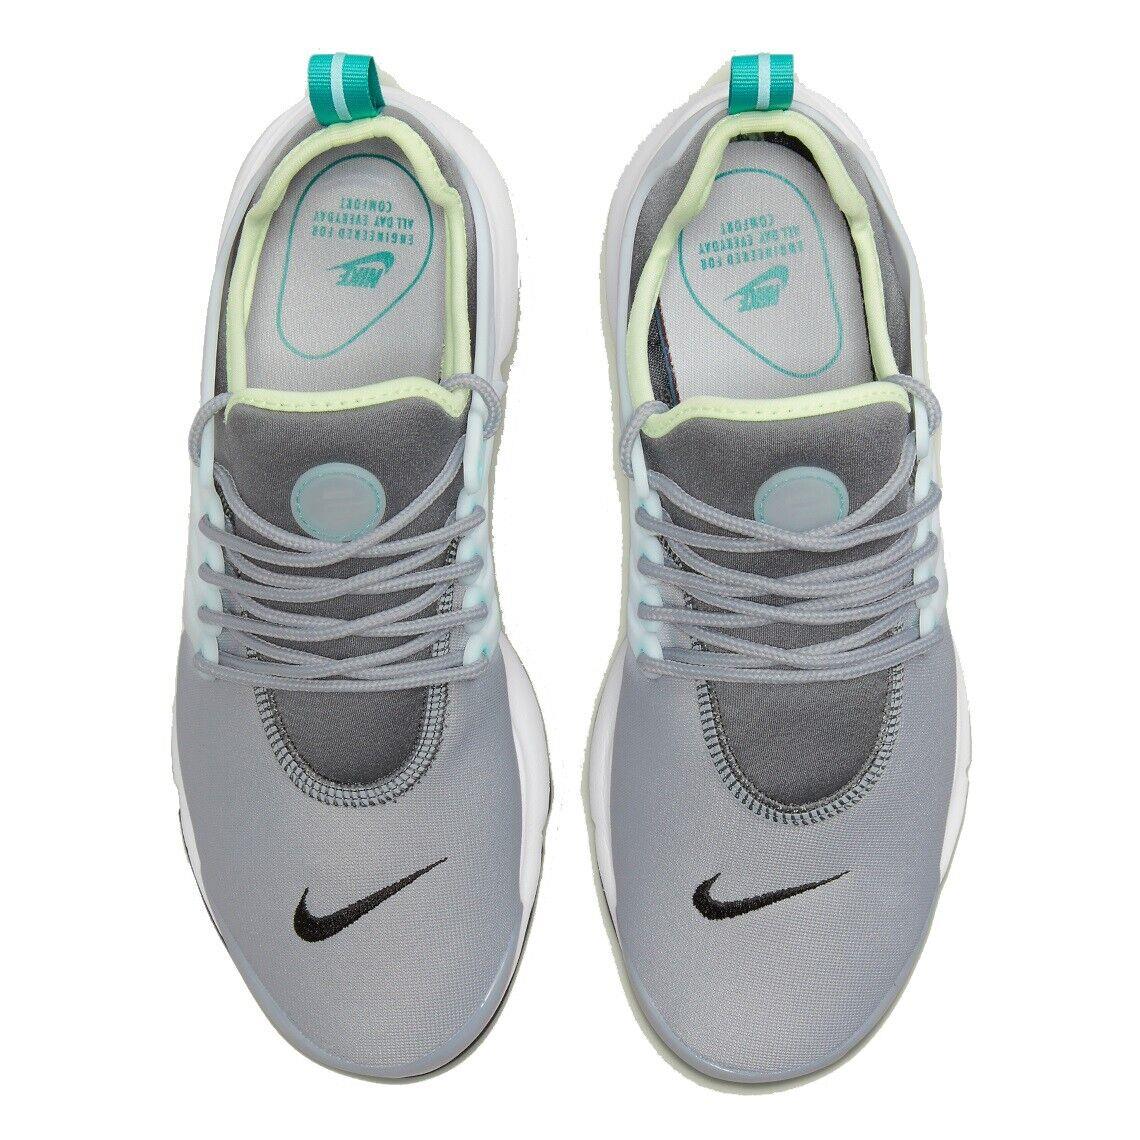 Nike shoes Air Presto - Gray 2